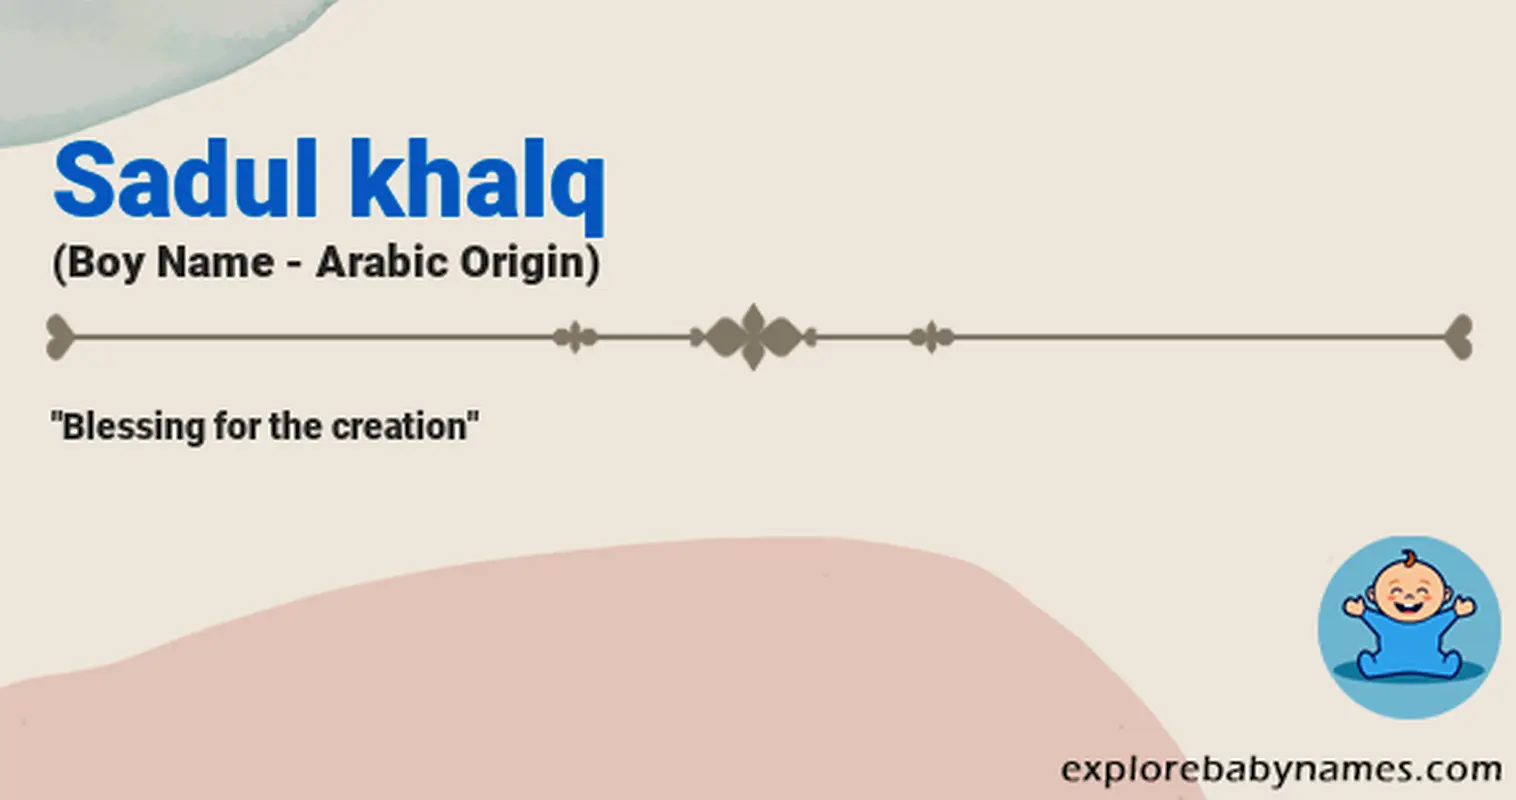 Meaning of Sadul khalq